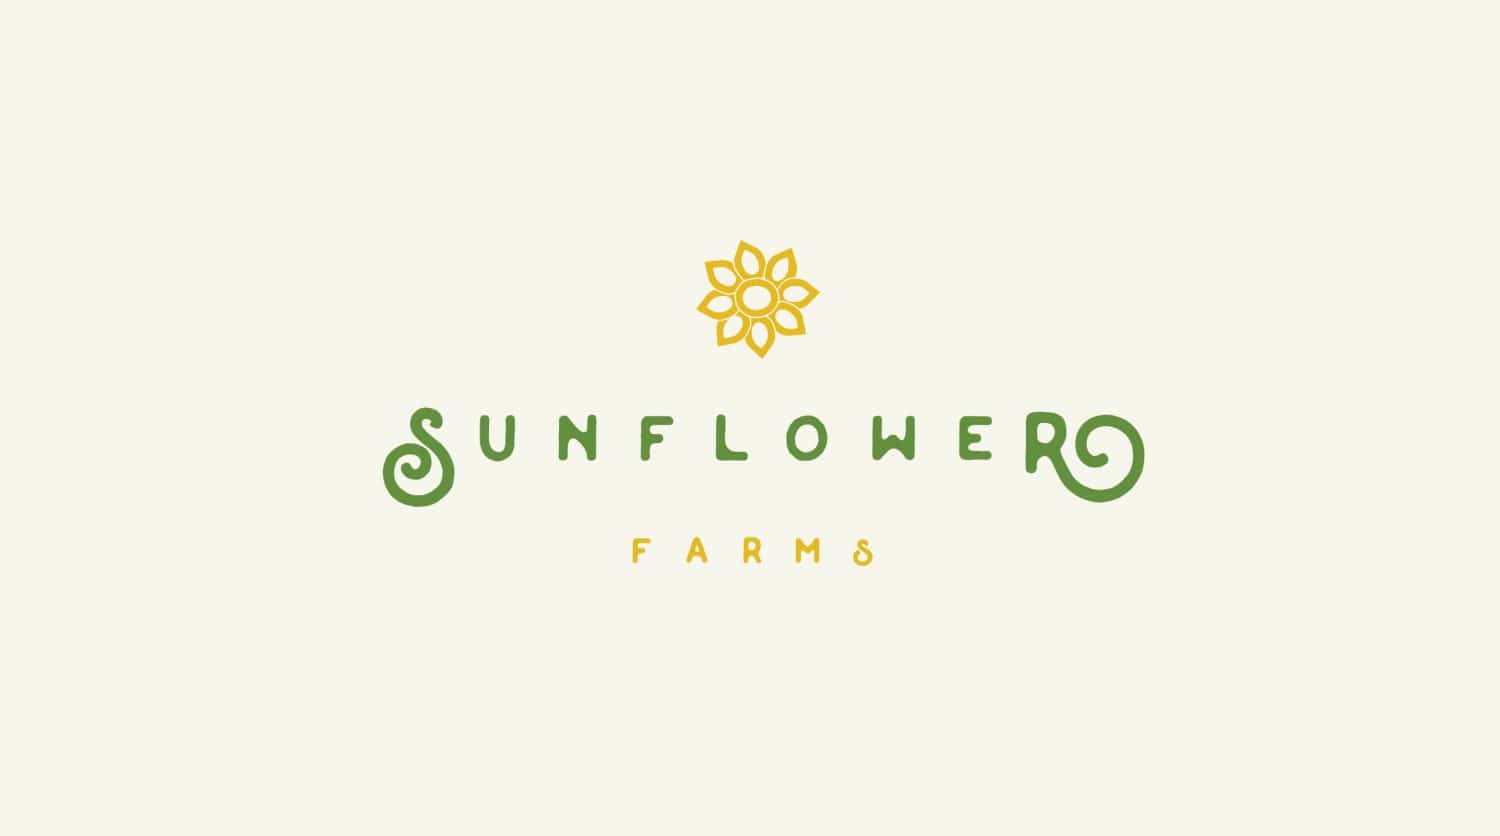 Sunflower Farms Logo by Jordis Small of Stellen Design - brand update